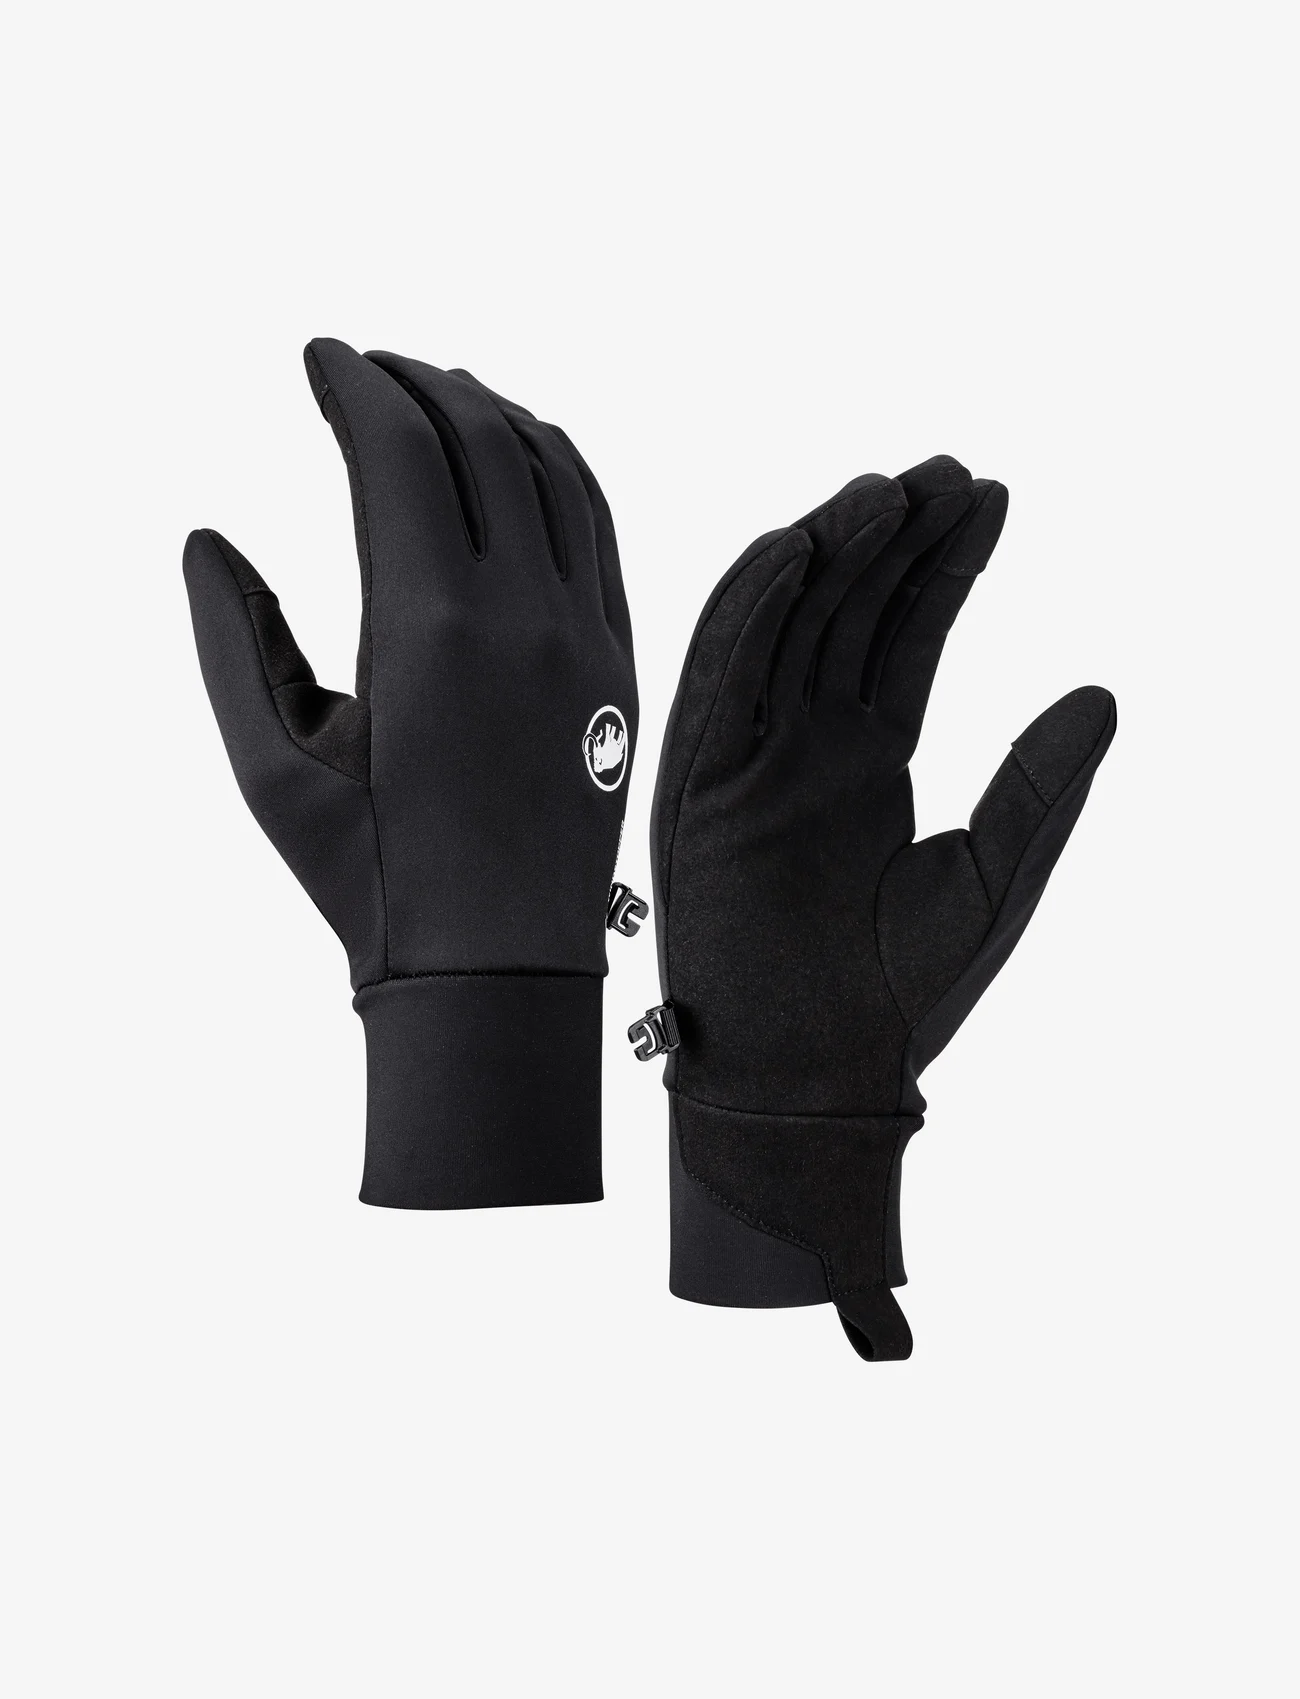 Mammut - Astro Glove - men - black - 1